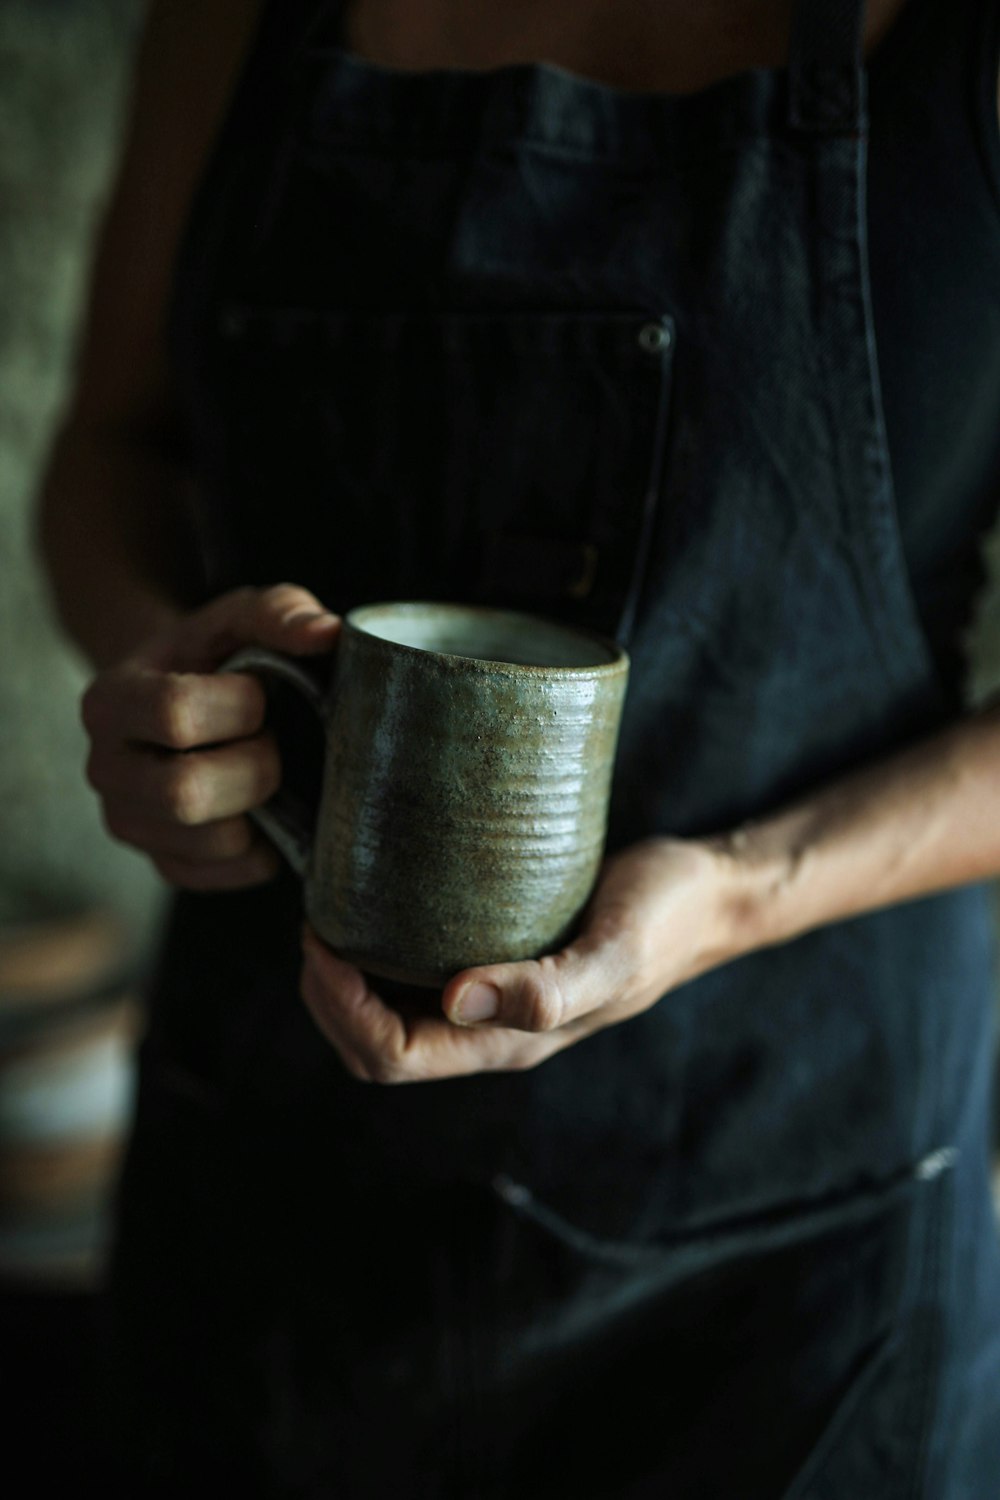 person holding ceramic mug